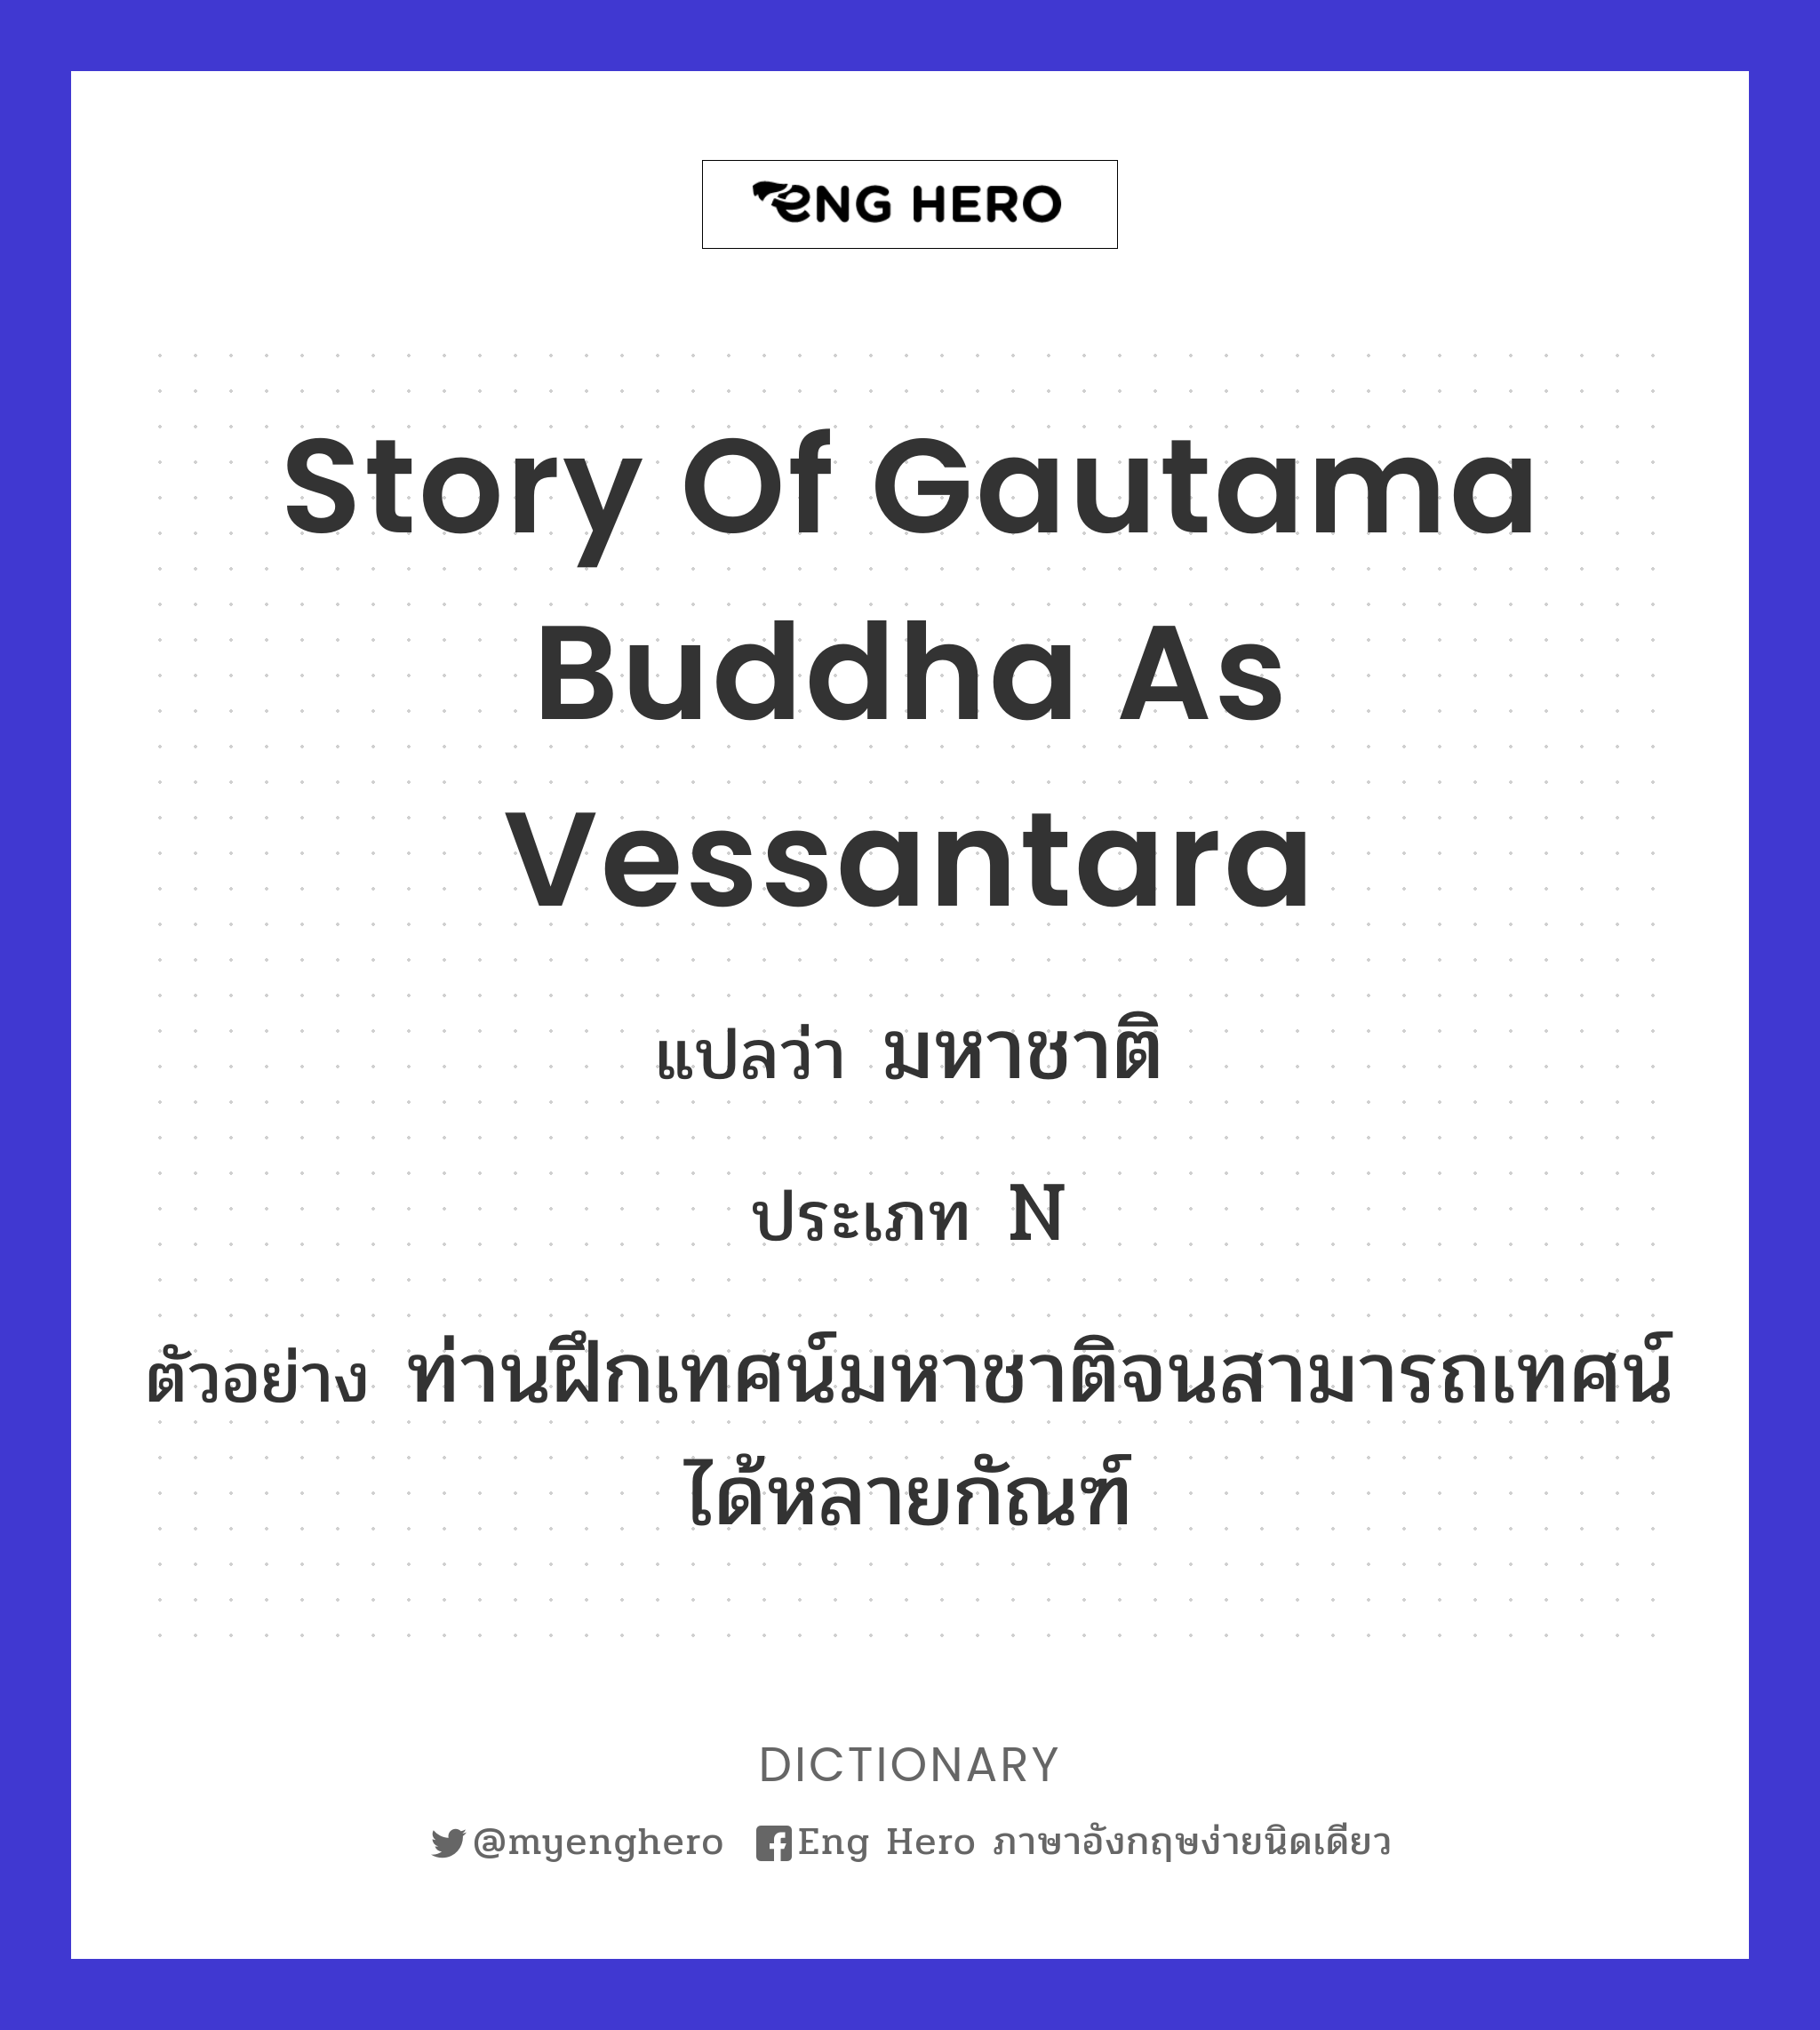 story of Gautama Buddha as Vessantara